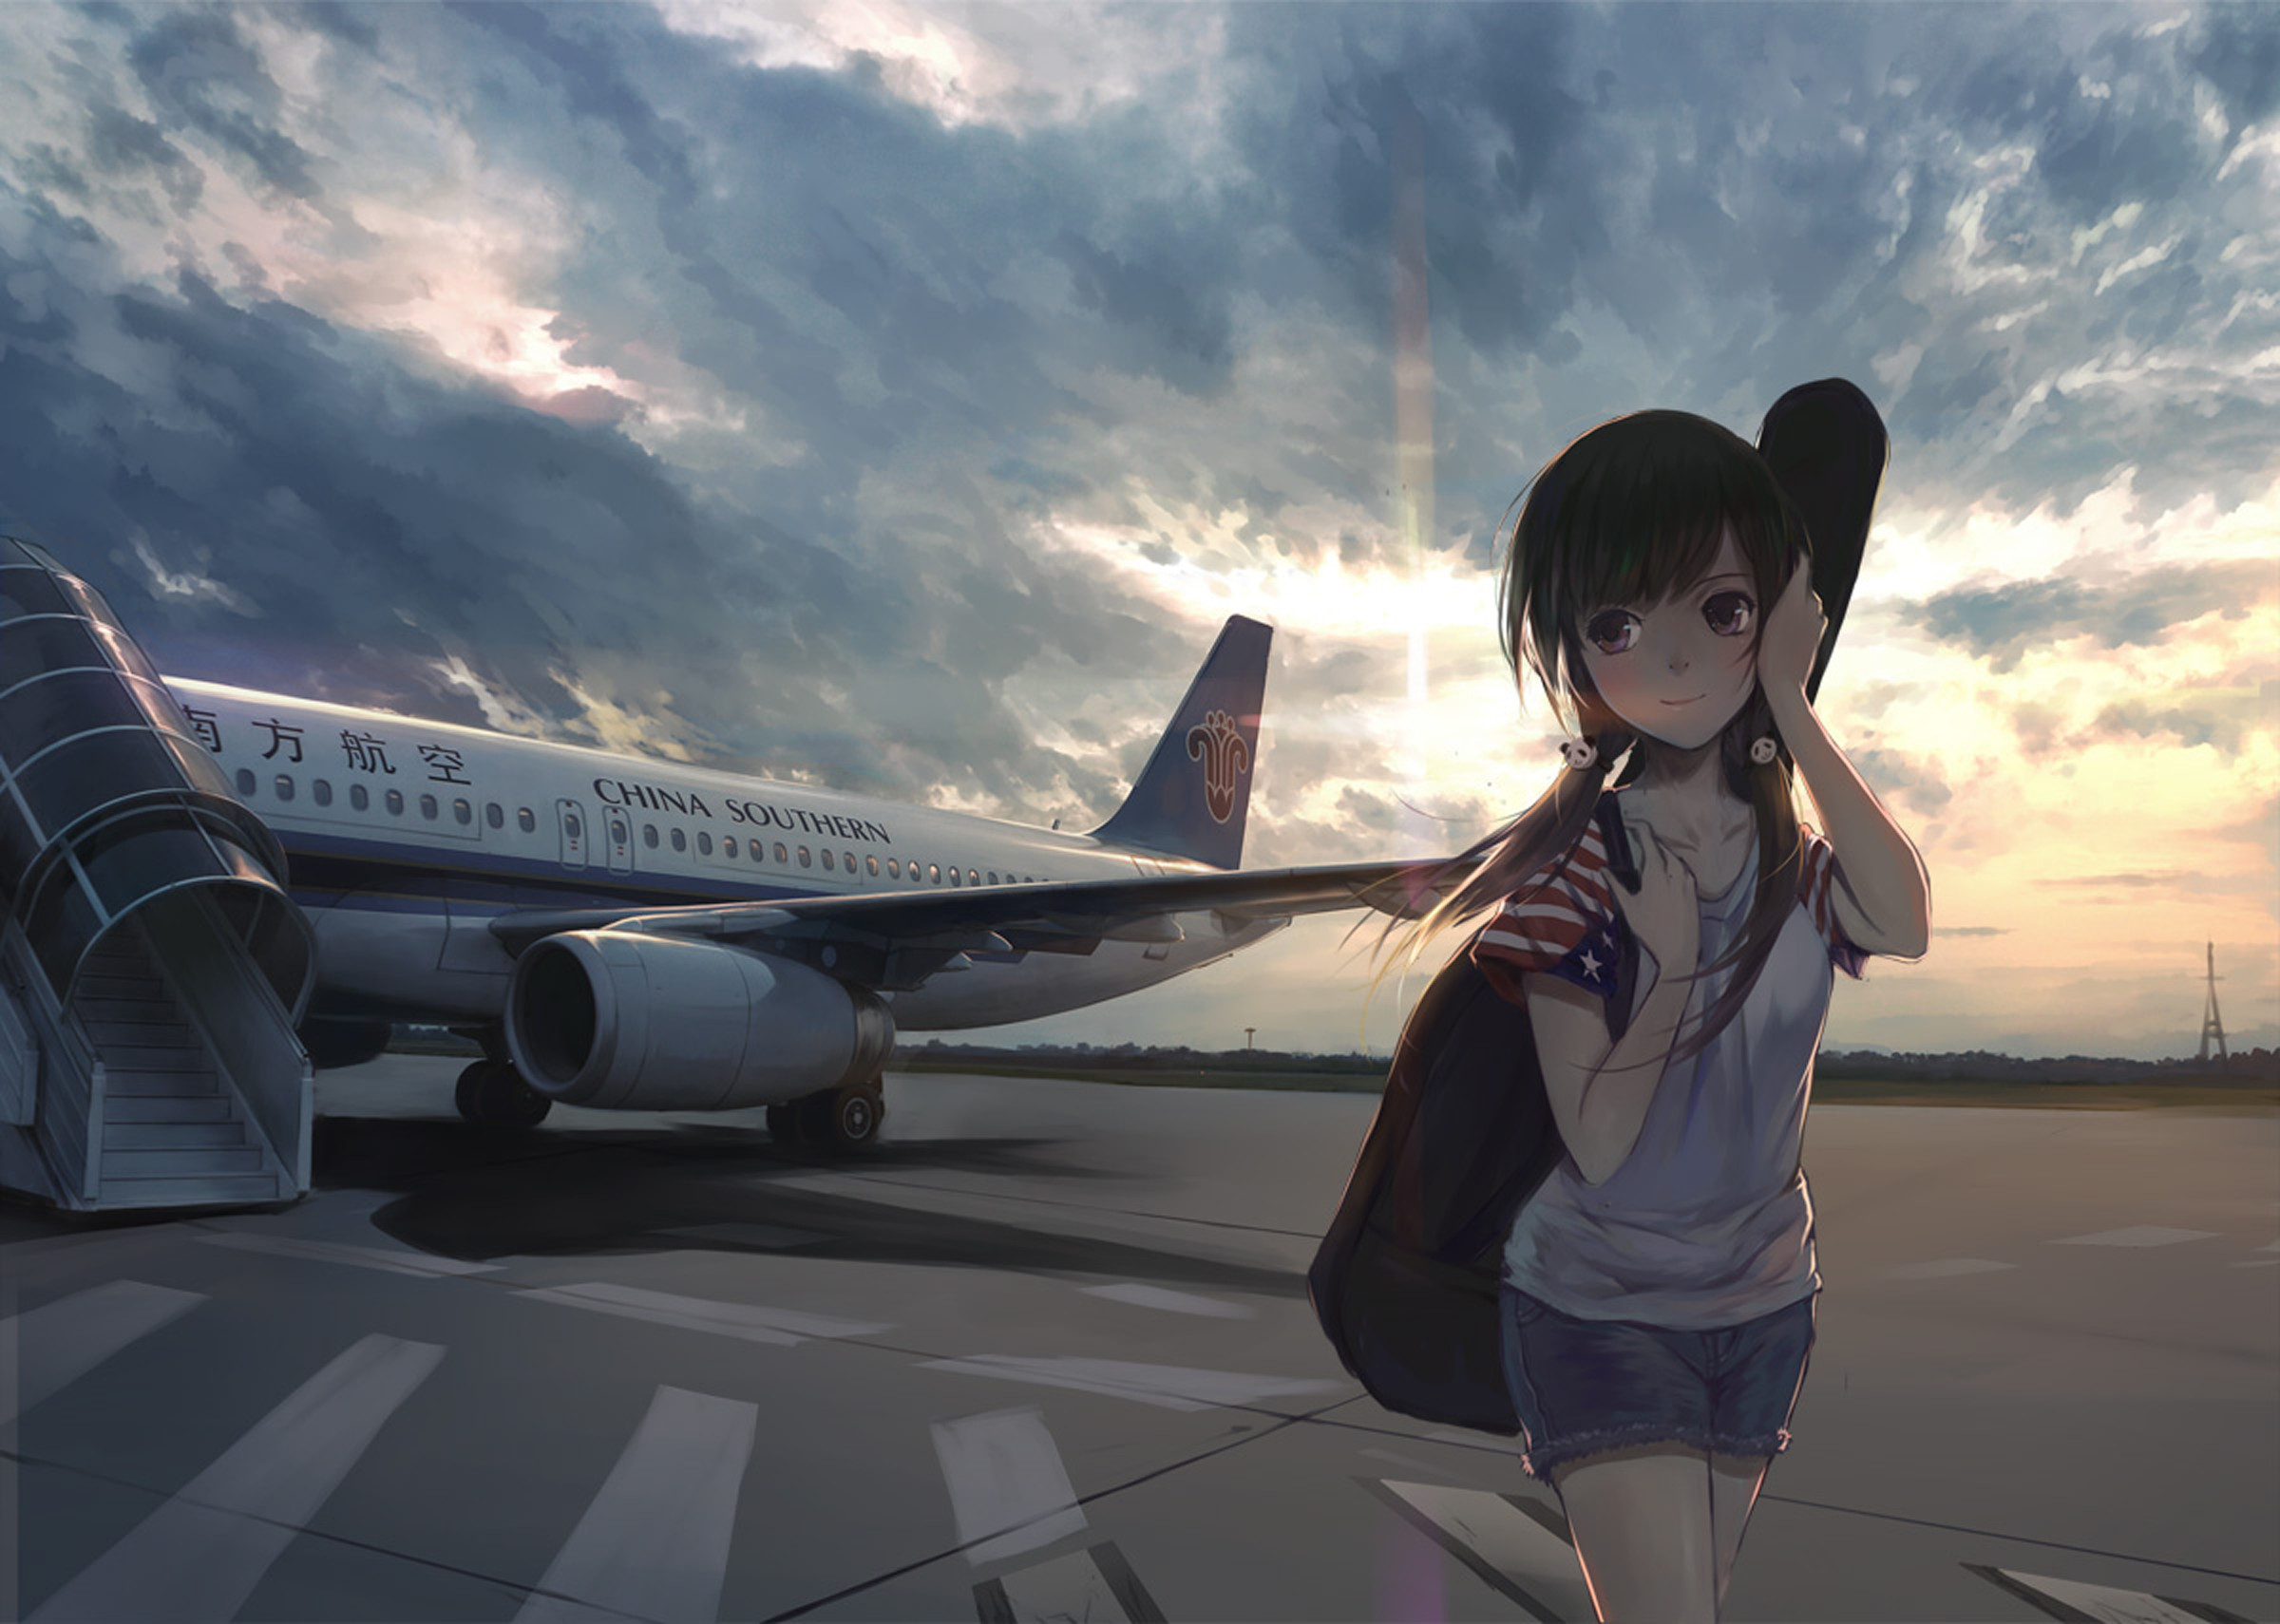 Anime Plane Flight | RFS - Real Flight Simulator PRO Android Gameplay -  YouTube